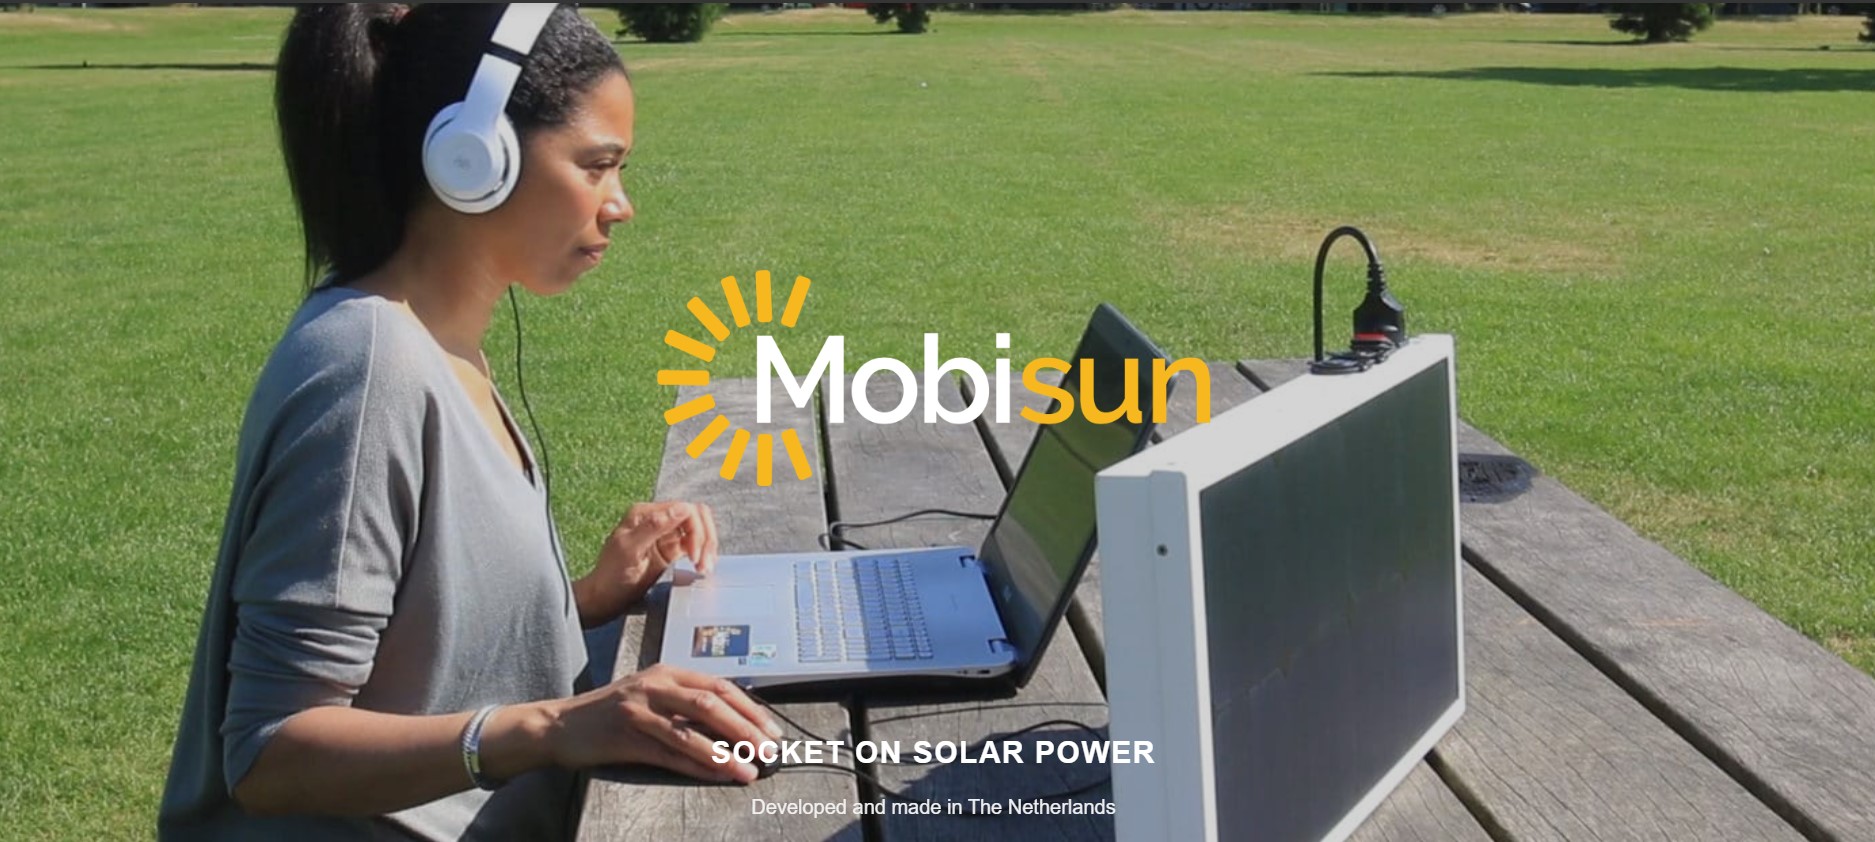 Portable Solar Generator 120W in parc laptop power bank